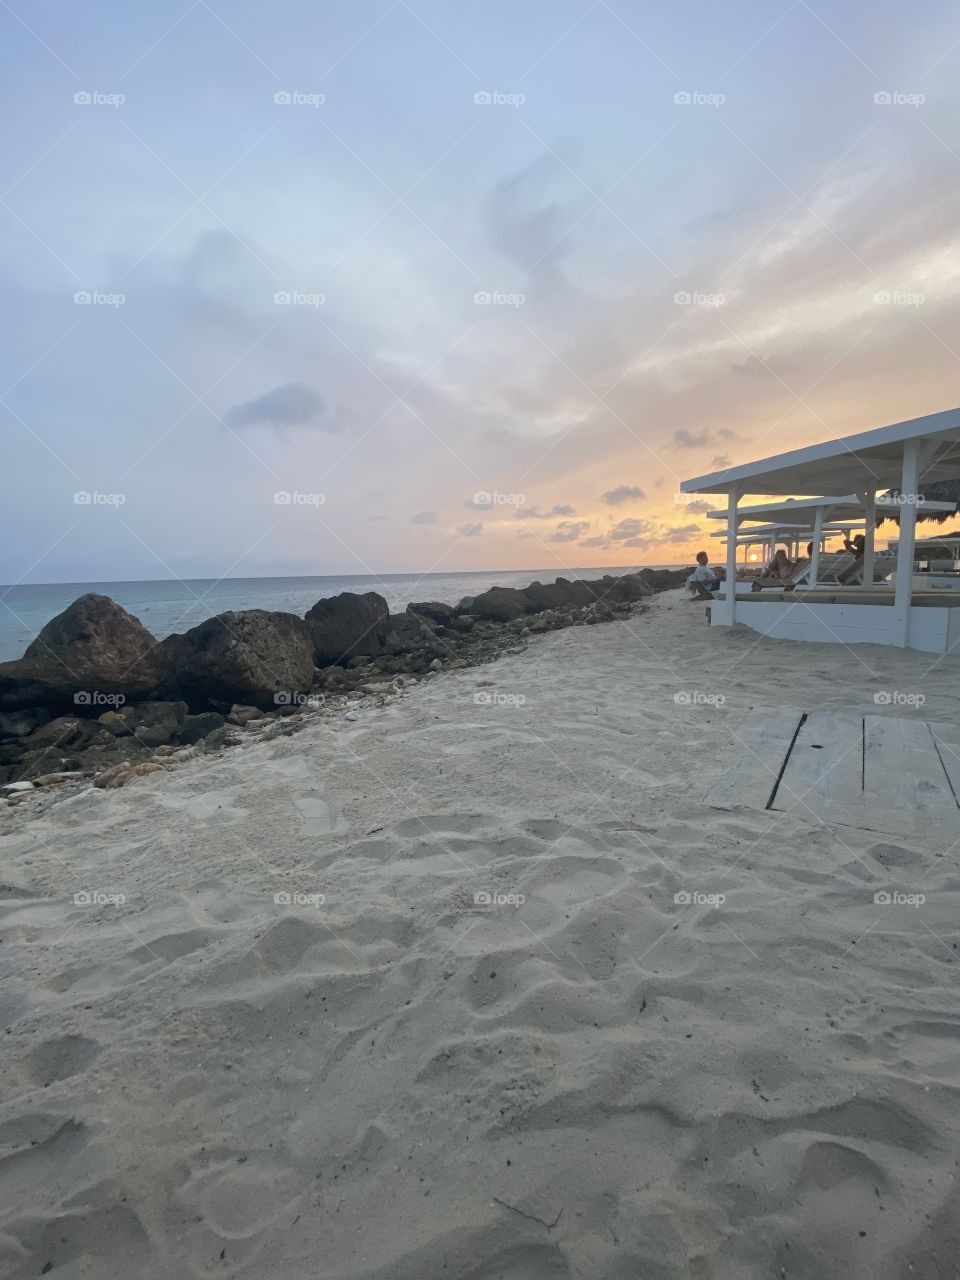 Sunset at the ocean/beach